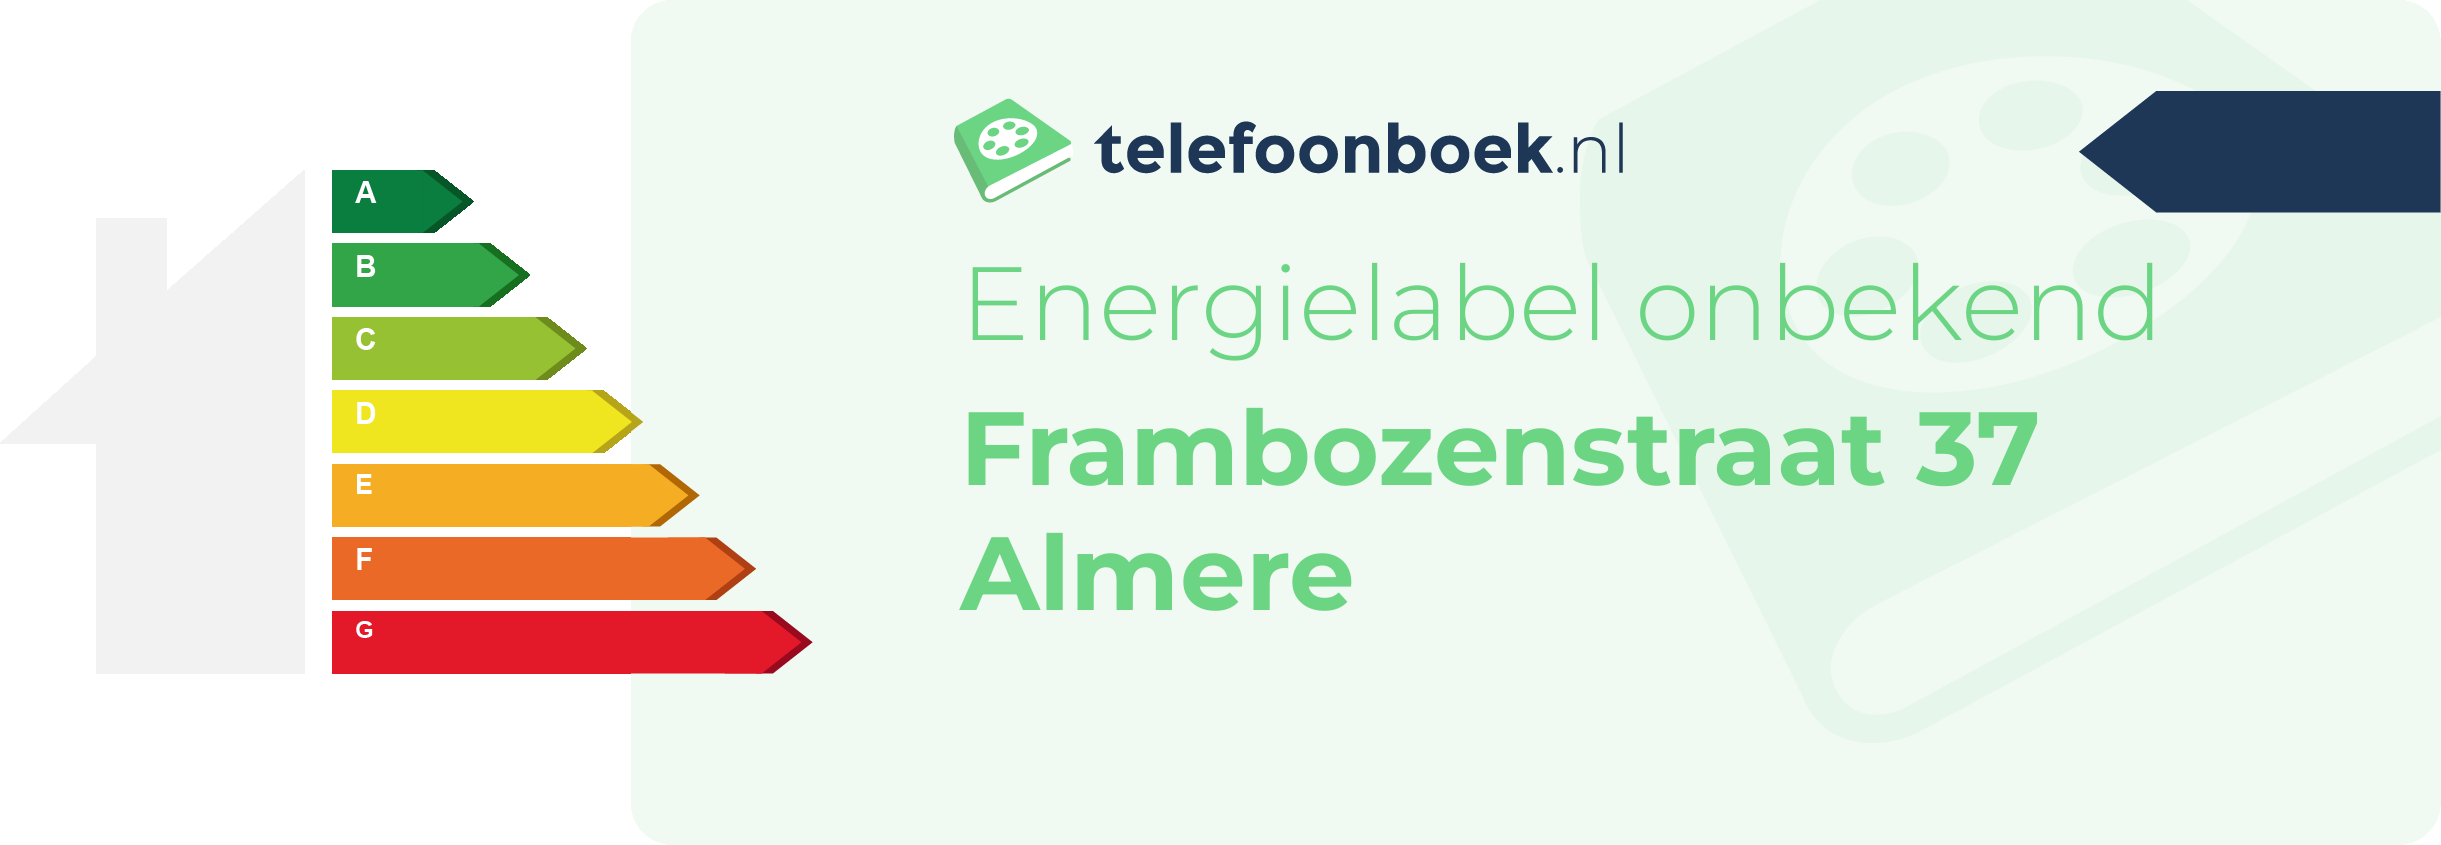 Energielabel Frambozenstraat 37 Almere